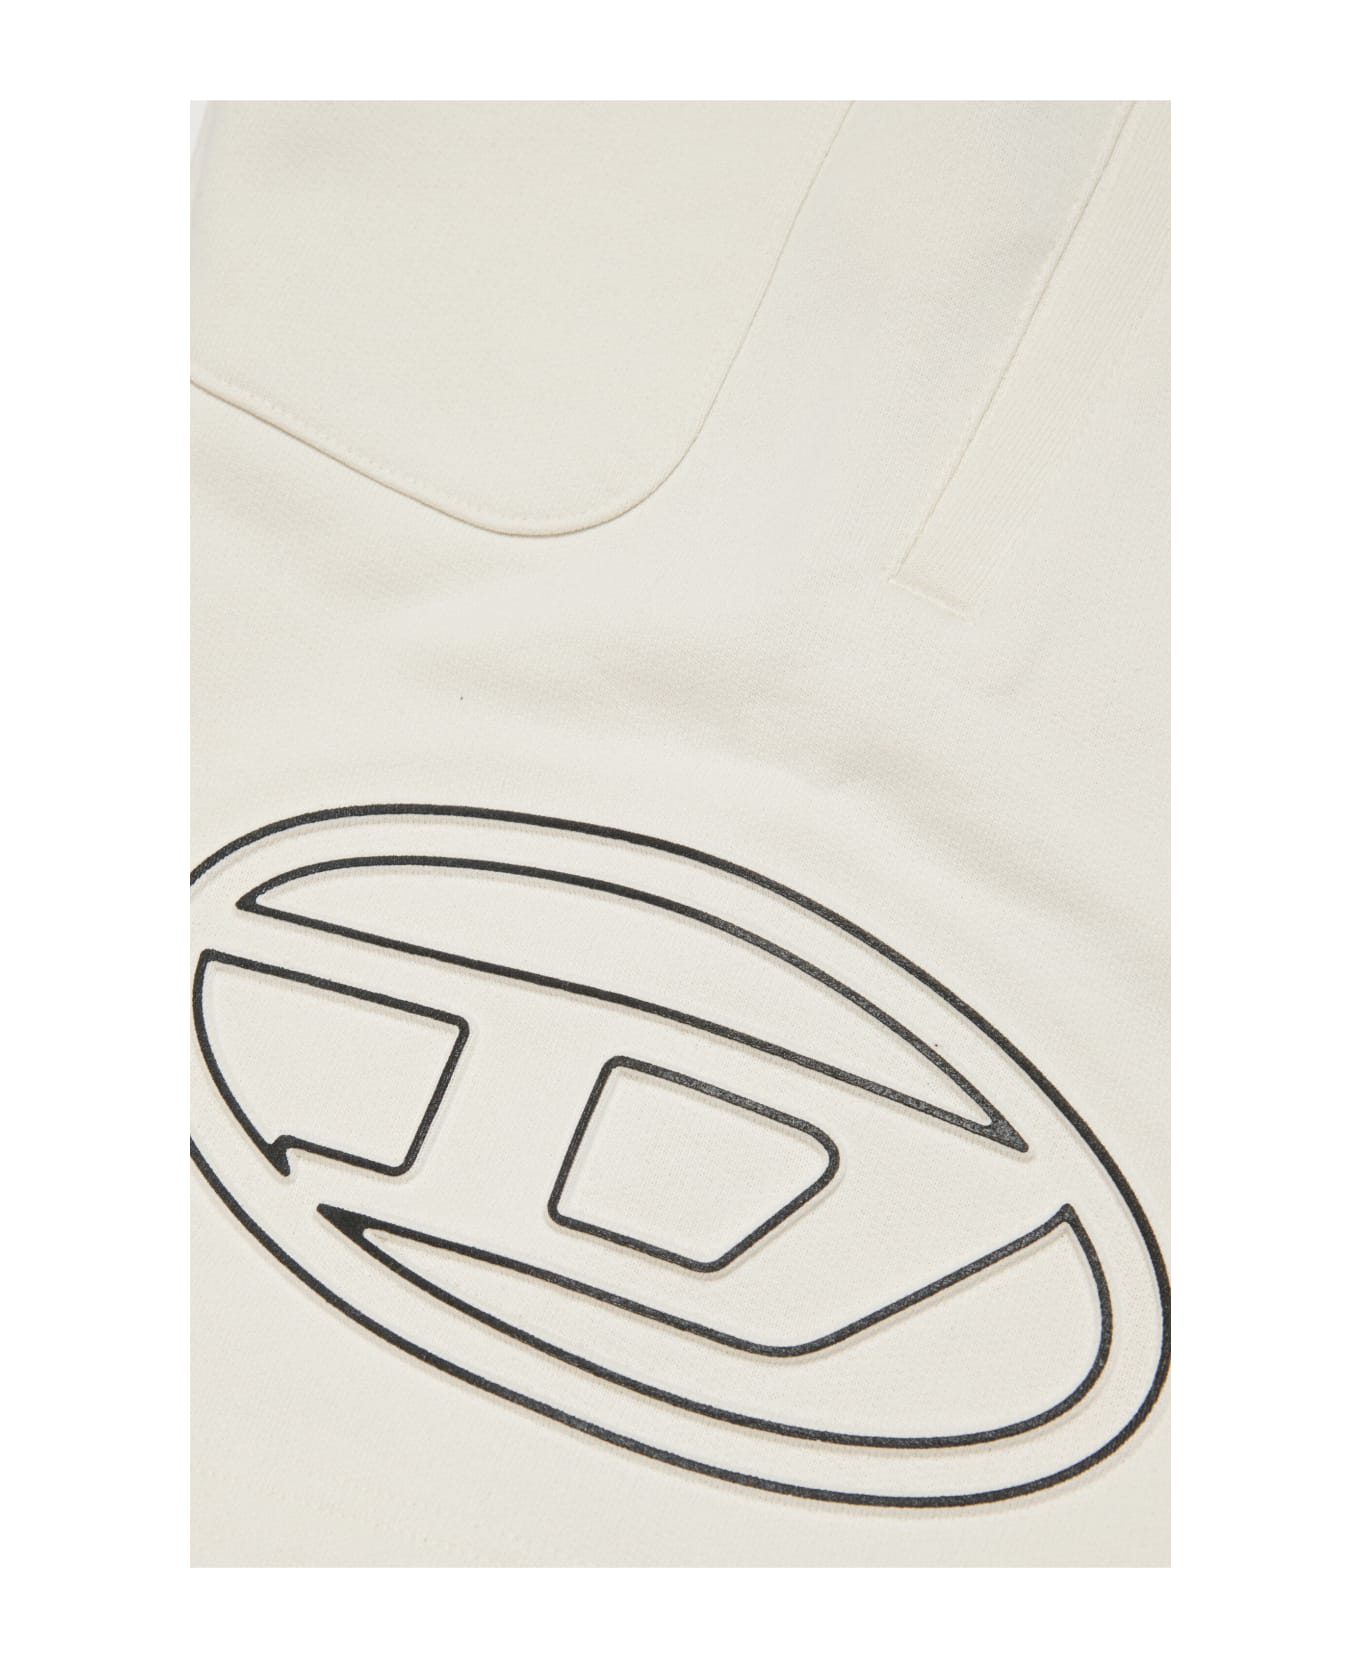 Diesel Pcurvbigoval Shorts Diesel Fleece Shorts With Oval D Logo - Bianco